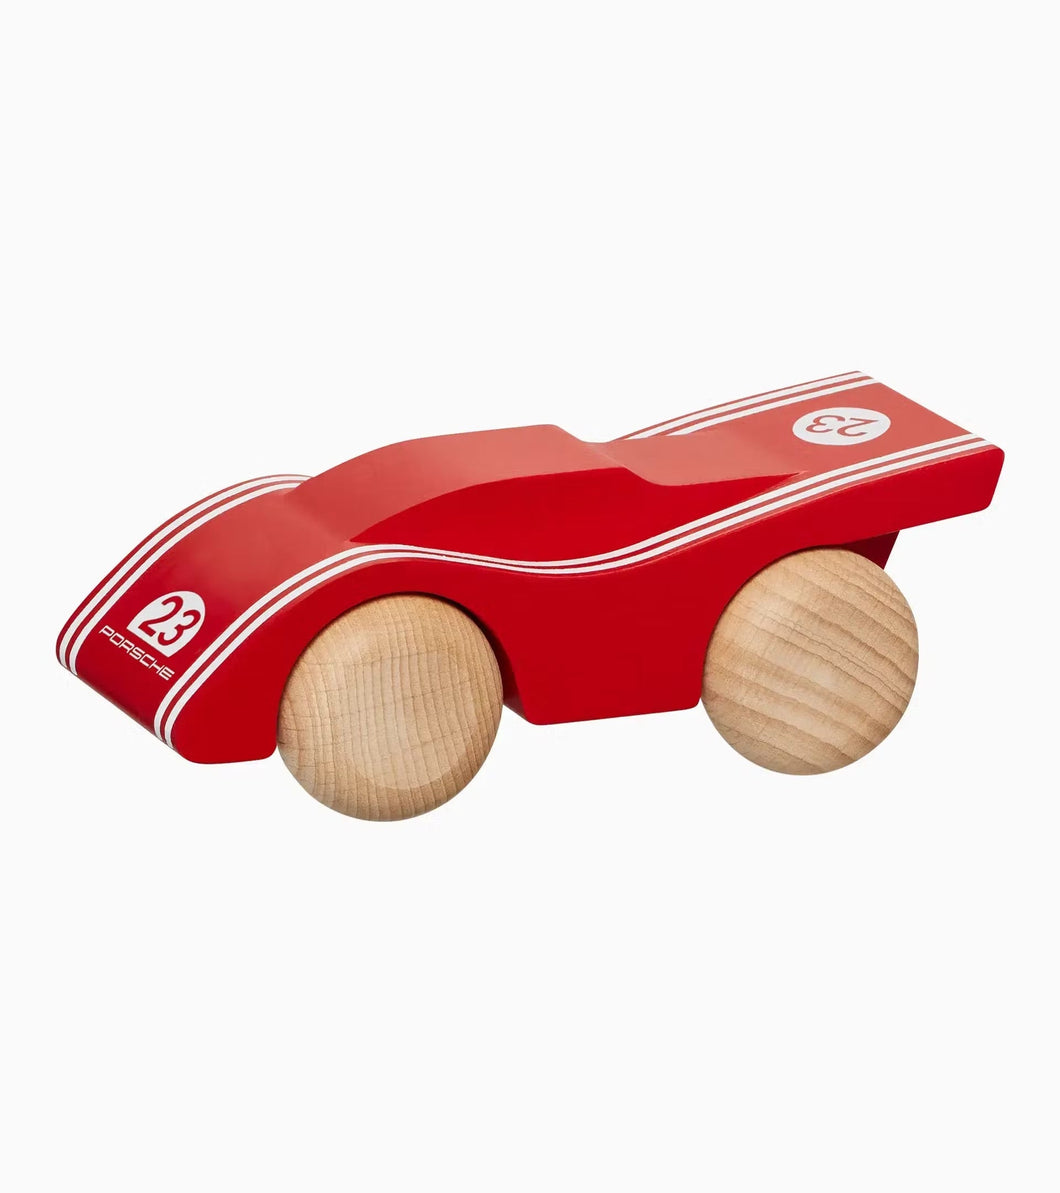 Wooden car – 917 Salzburg